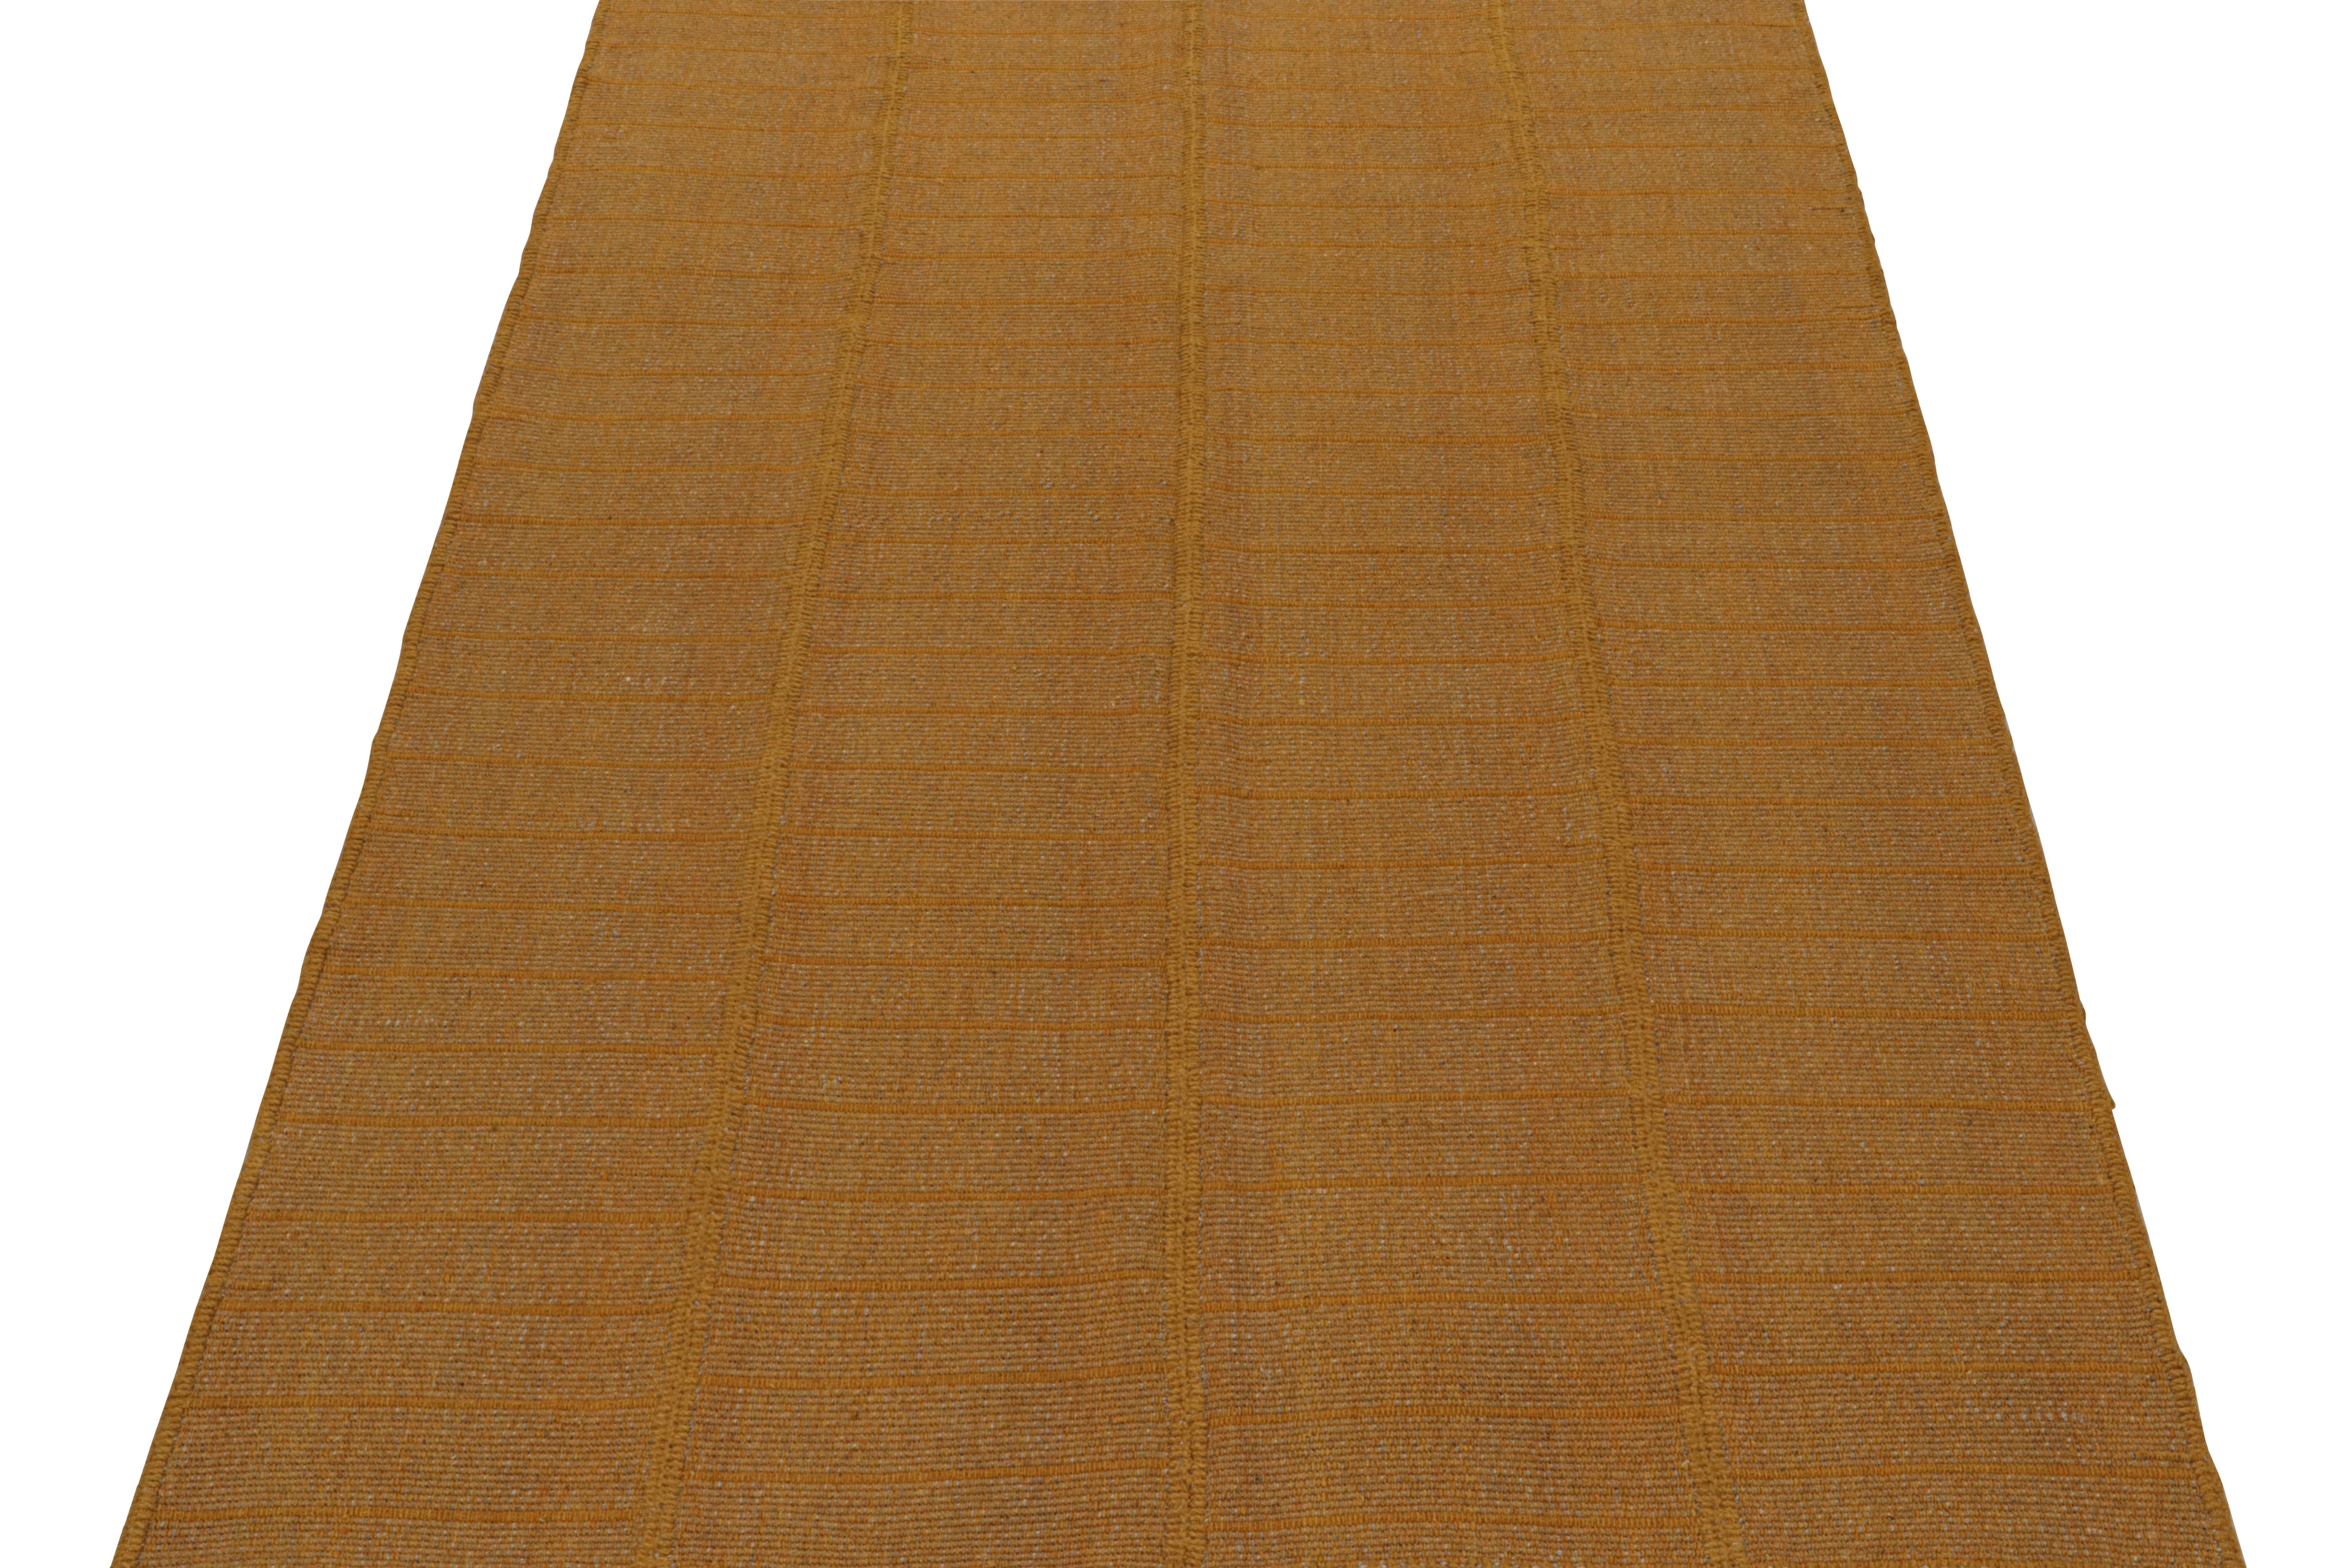 Afghan Rug & Kilim’s Modern Kilim Rug with Textural Stripes in Gold and Orange Tones For Sale